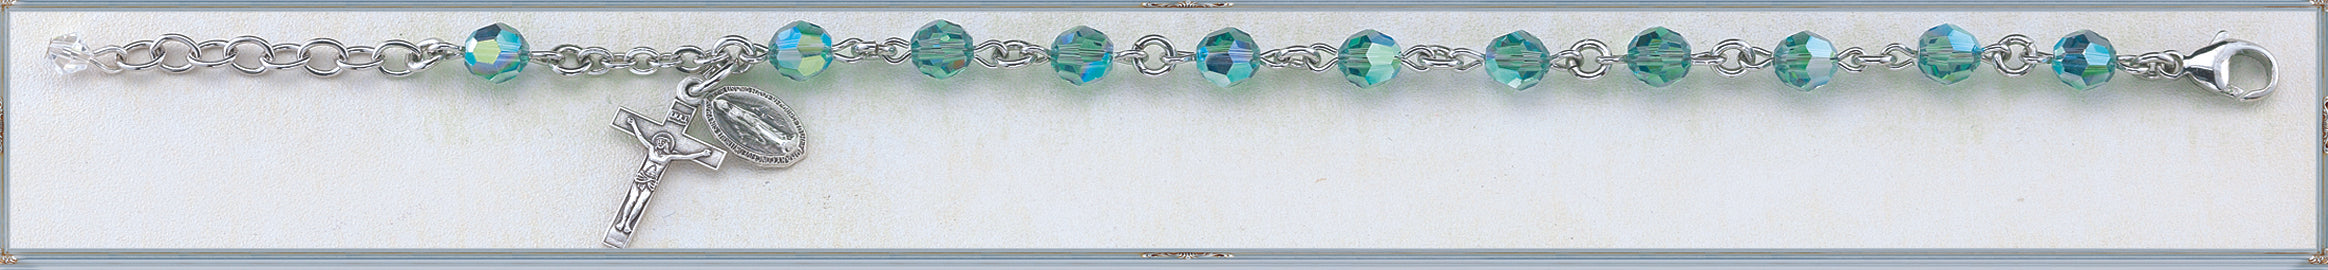 Erinite Round Faceted Swarovski Crystal Sterling Bracelet